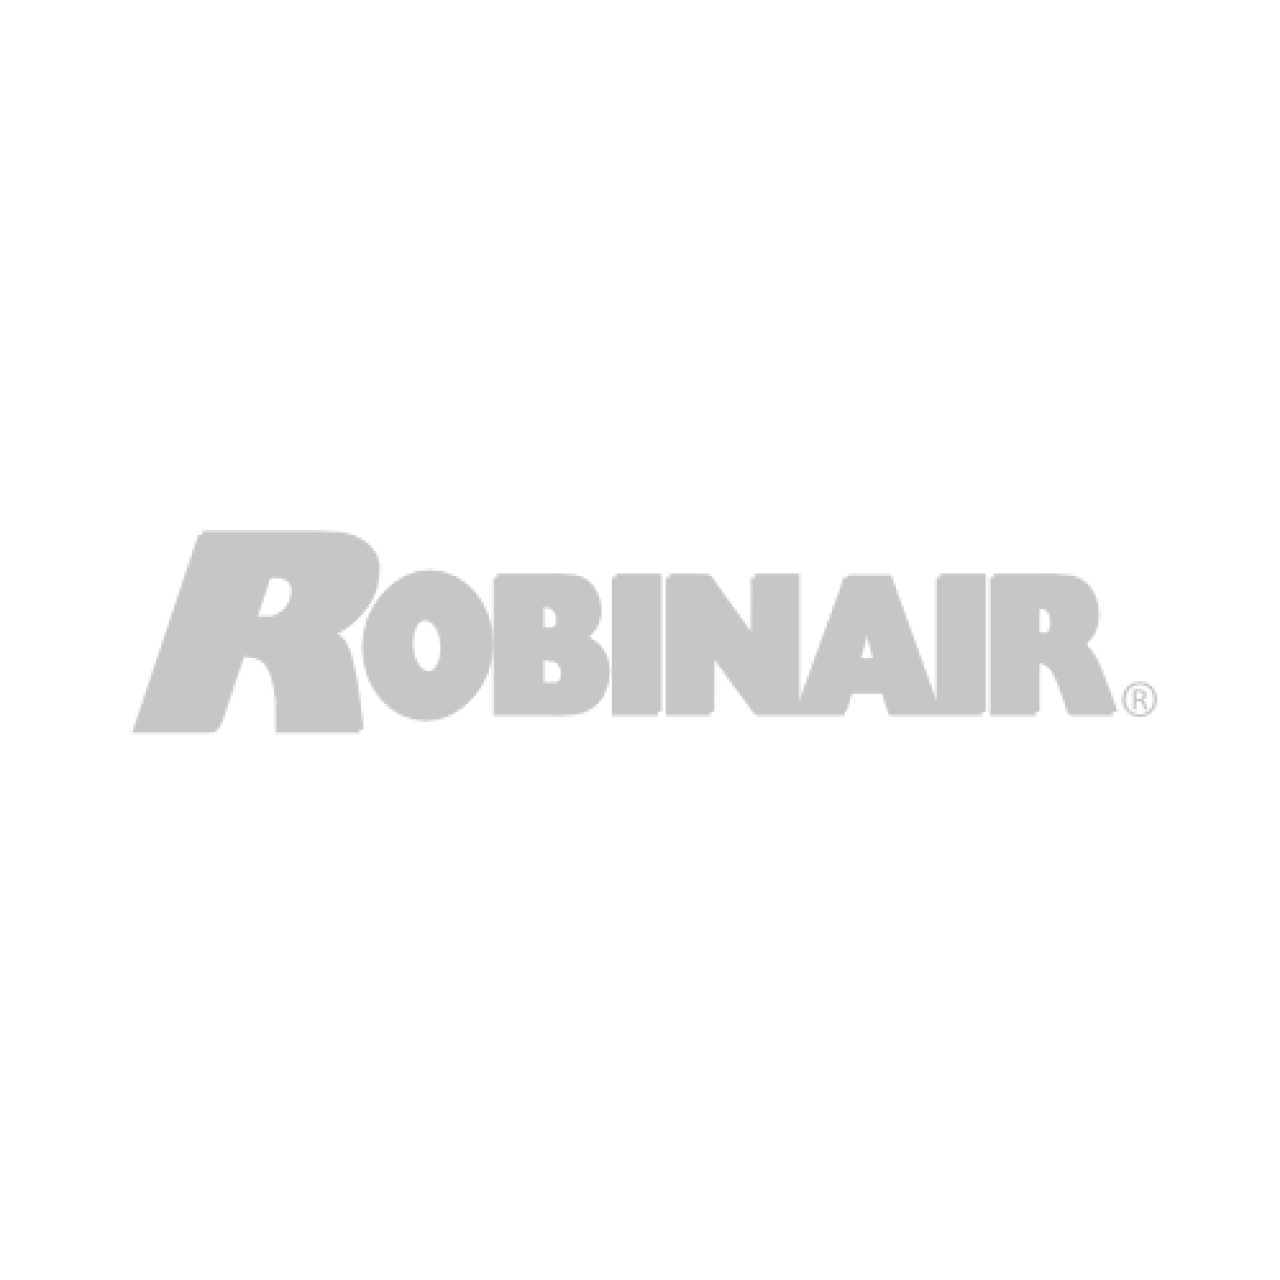 Robinair Logo - WHEEL, SIDEWINDER | Robinair